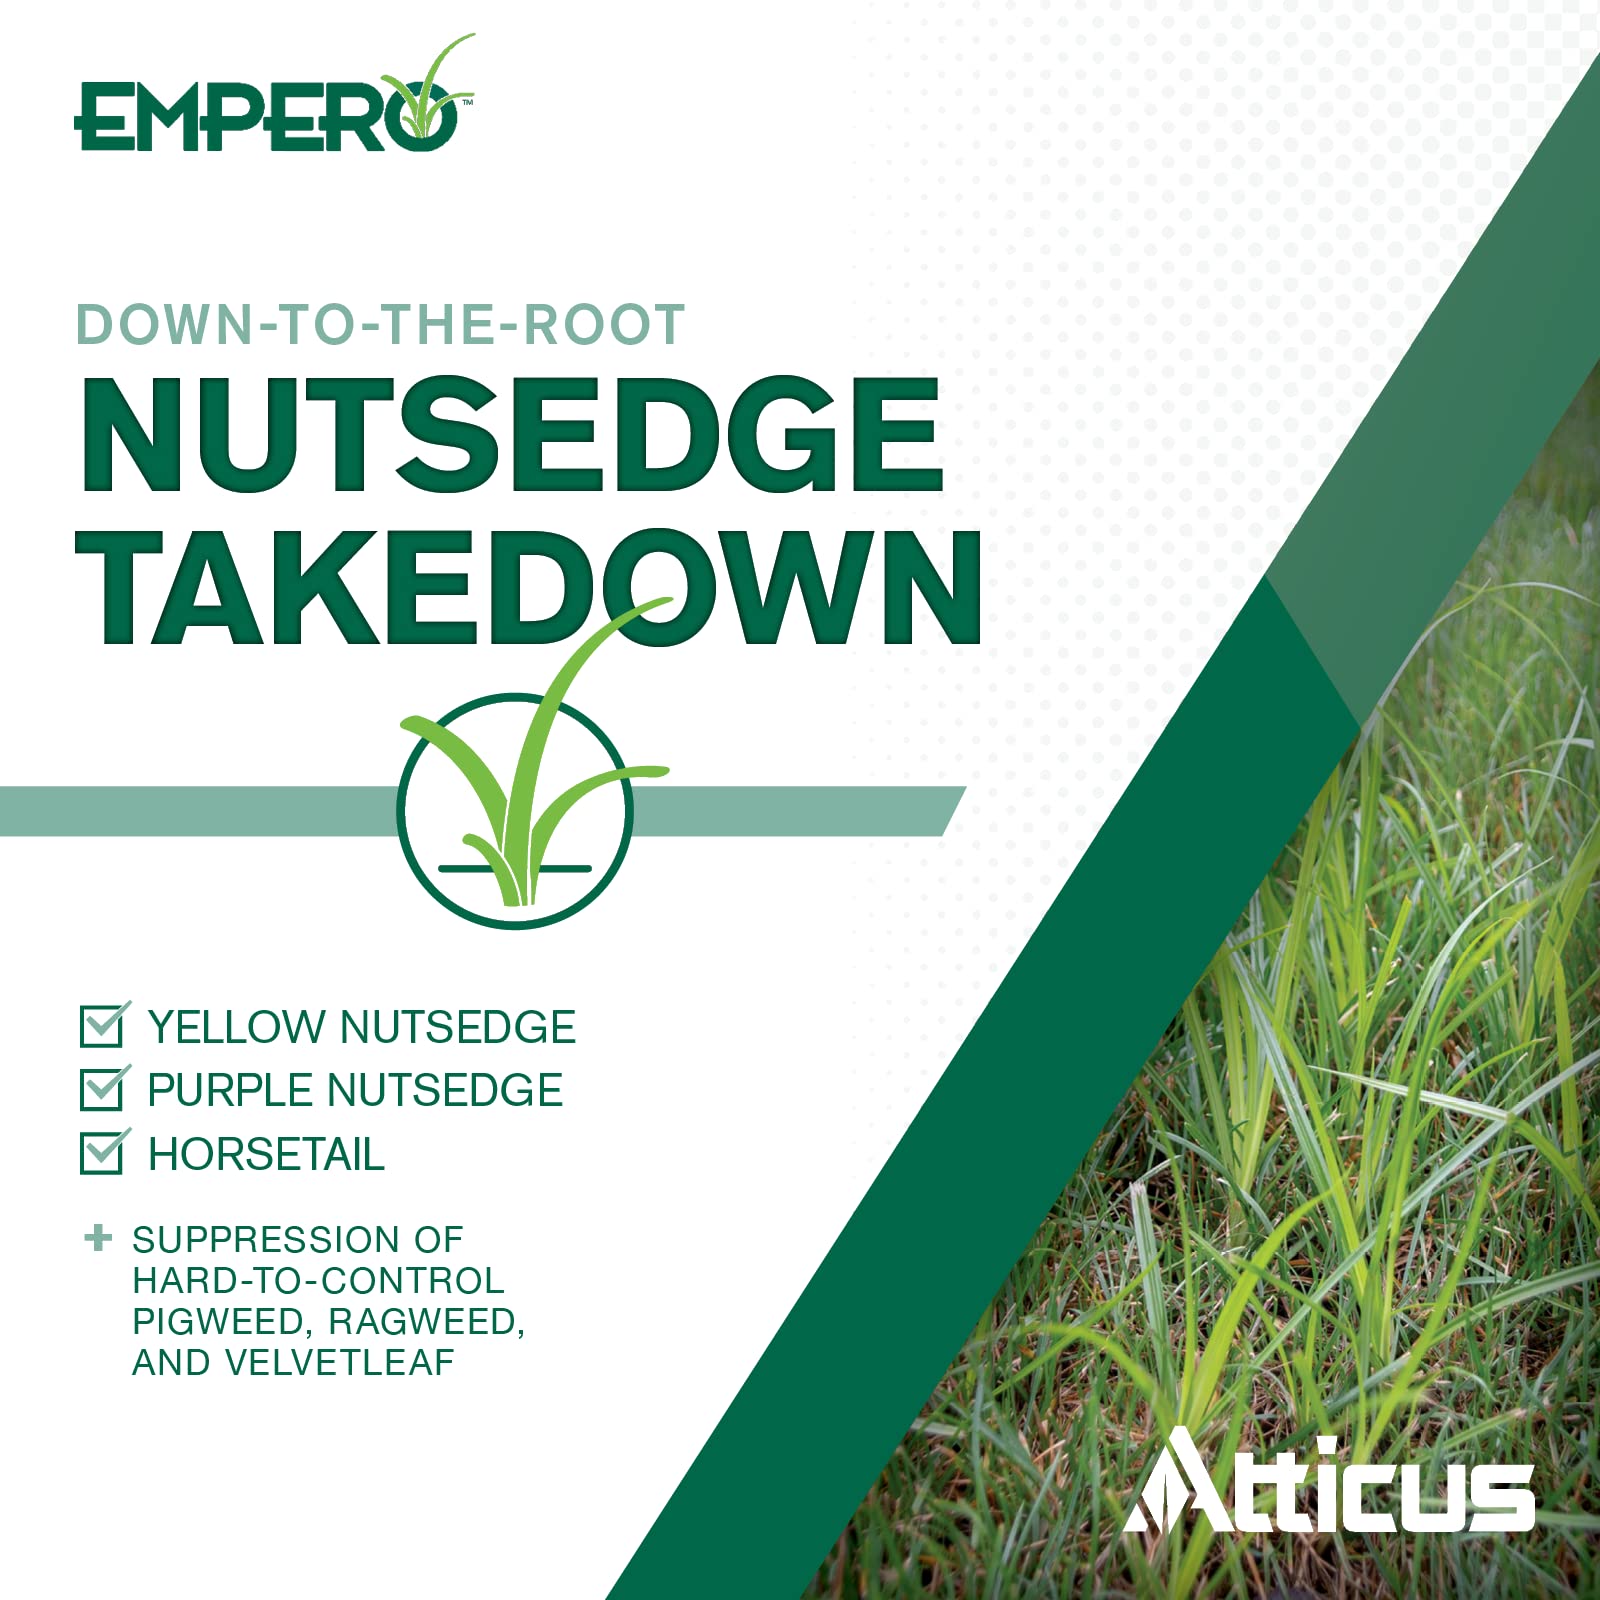 Empero Nutsedge Killer (1.33 oz) by Atticus (Compare to SedgeHammer) - Halosulfuron-Methyl 75% Turf Herbicide - Kills Nut Grass in Established Lawns, Ornamental Turfgrass, & Landscape Areas